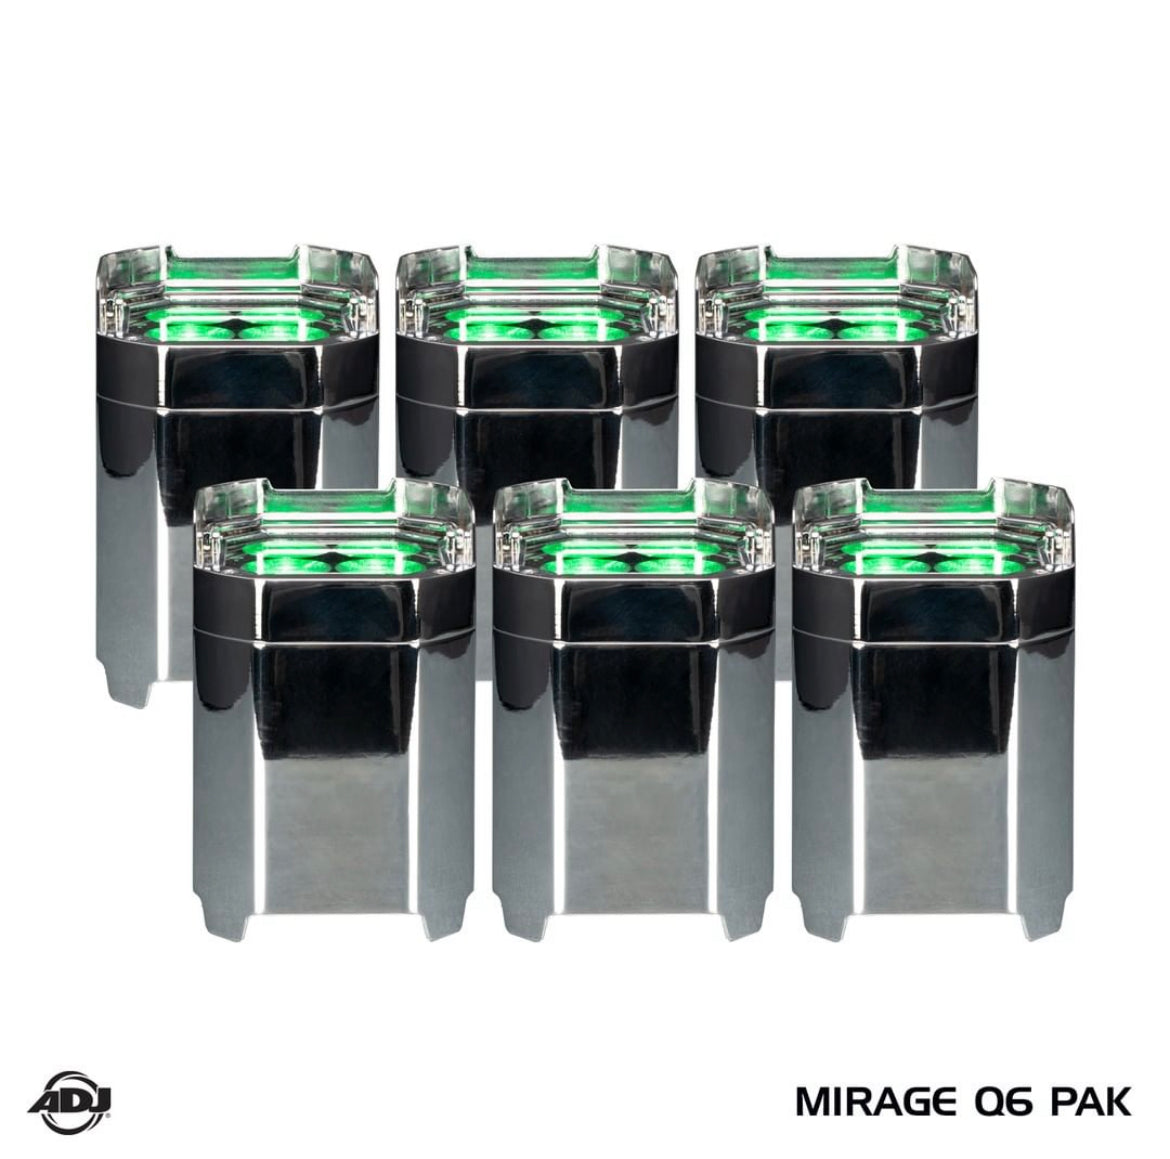 American DJ ADJ Mirage Q6 PAK Rechargeable Event Lighting System [B-STOCK]